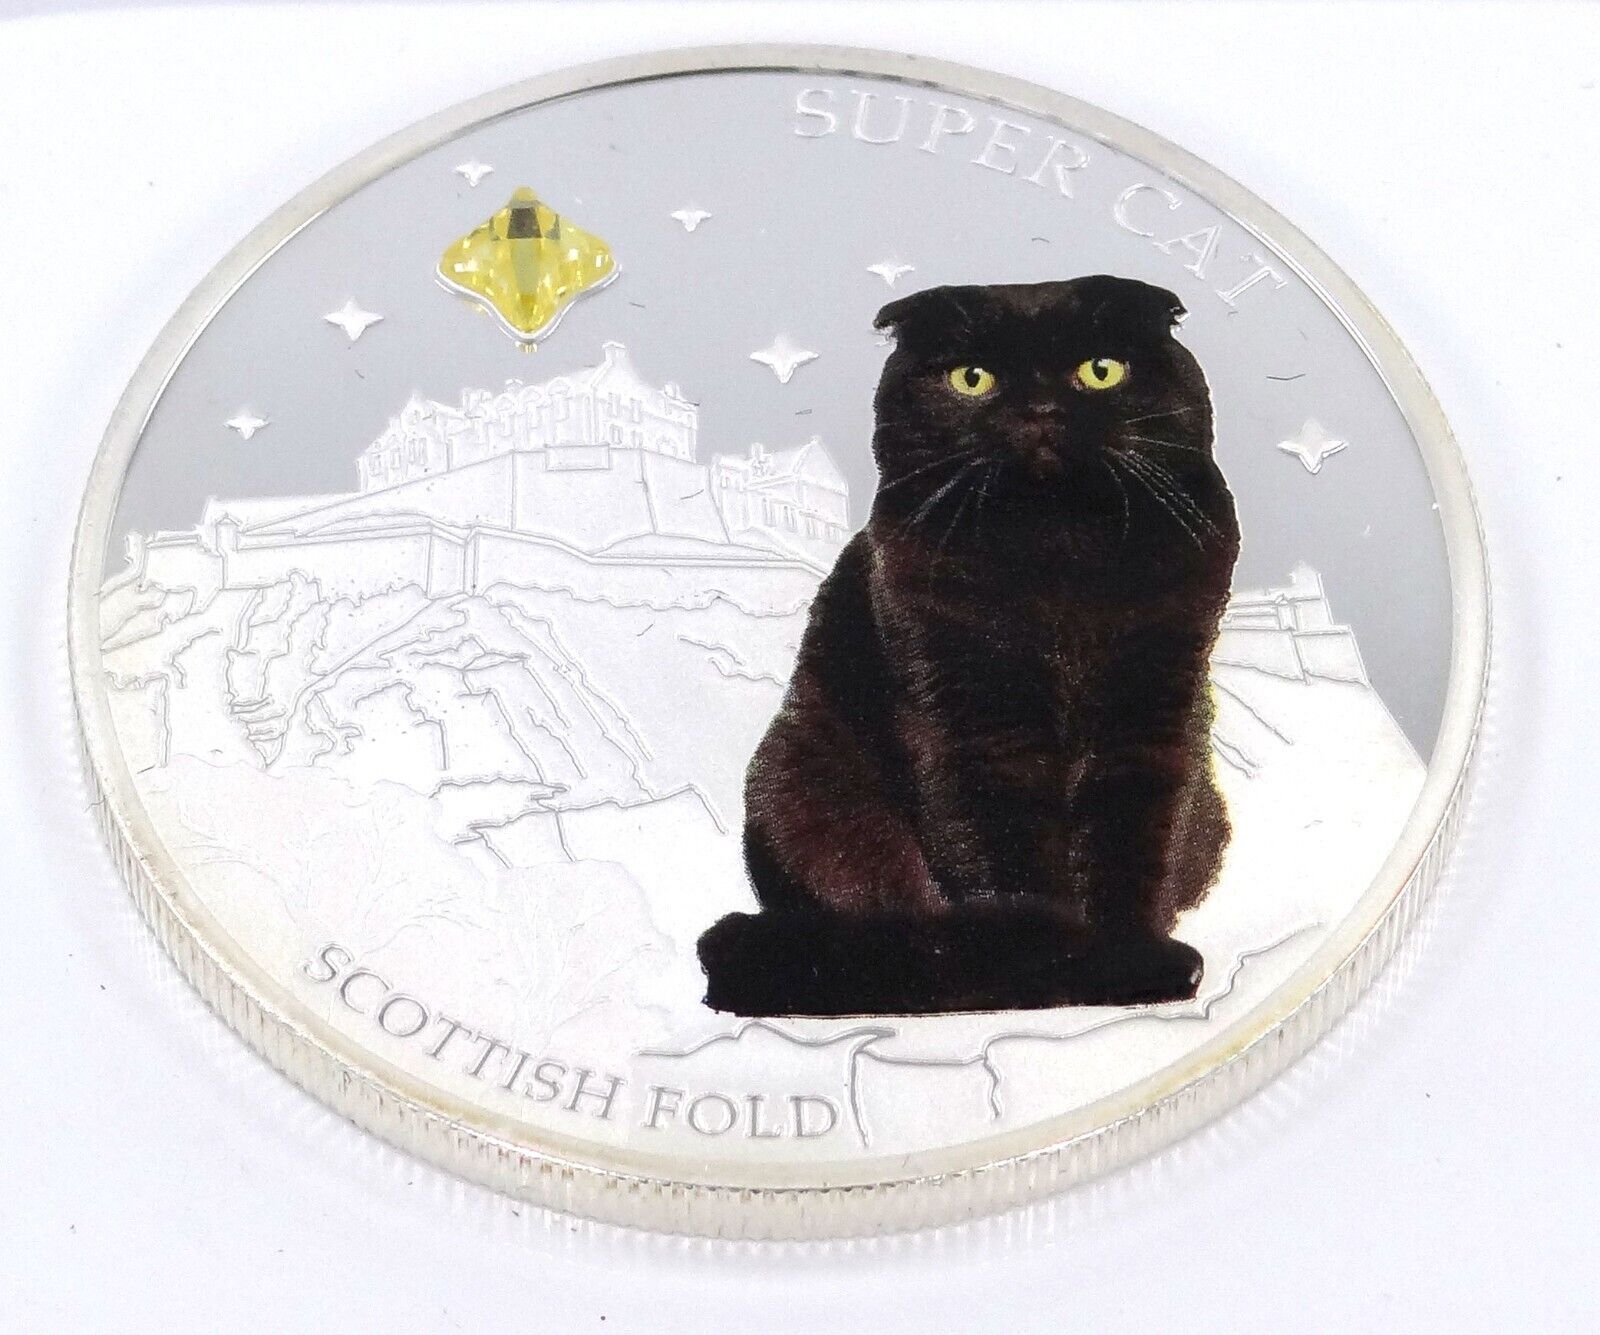 1 Oz Silver Coin 2013 $2 Fiji Dogs & Cats Super Cat w/ stone - Scottish Fold-classypw.com-1